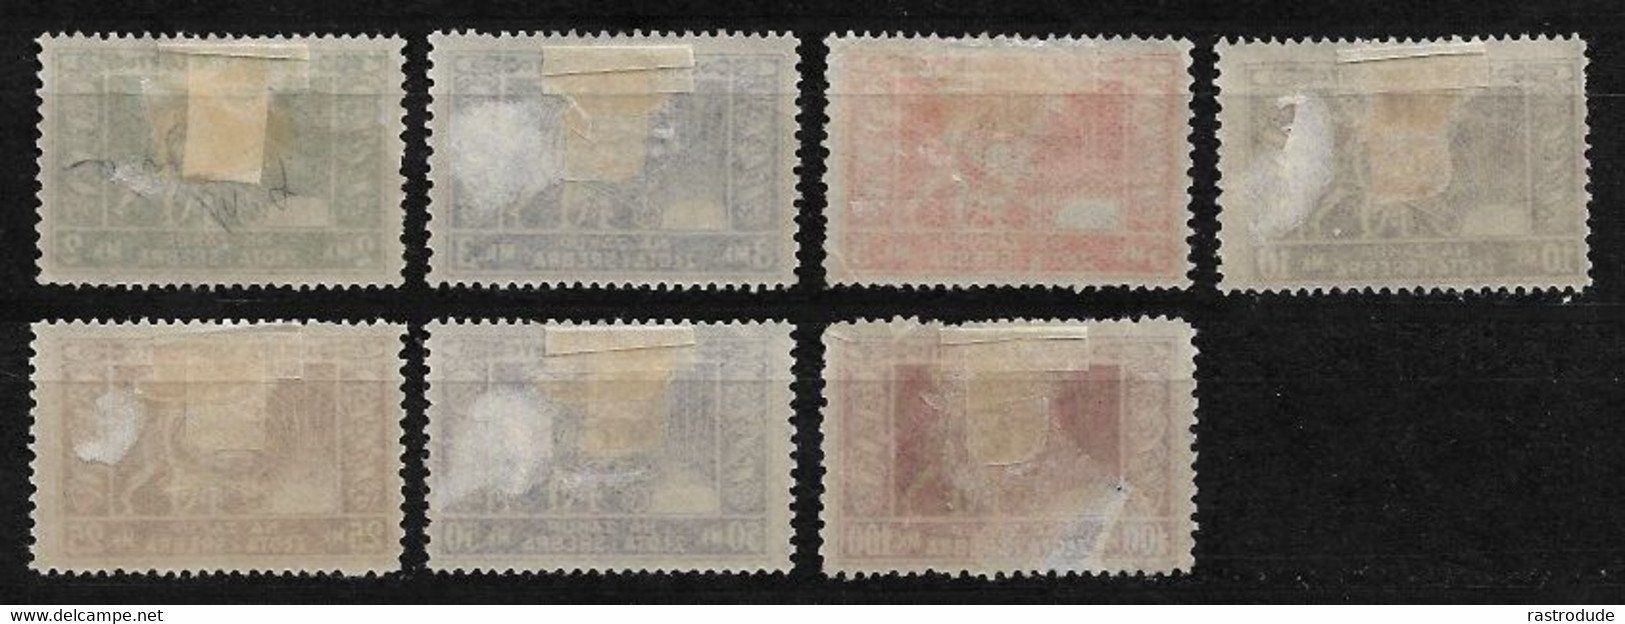 1923 POLEN Poland SKARB NARODOWY NA ZAKUP ZLOTA I SREBRA Polish Treasury * - PURCHASE OF GOLD AND SILVER - Revenue Stamps